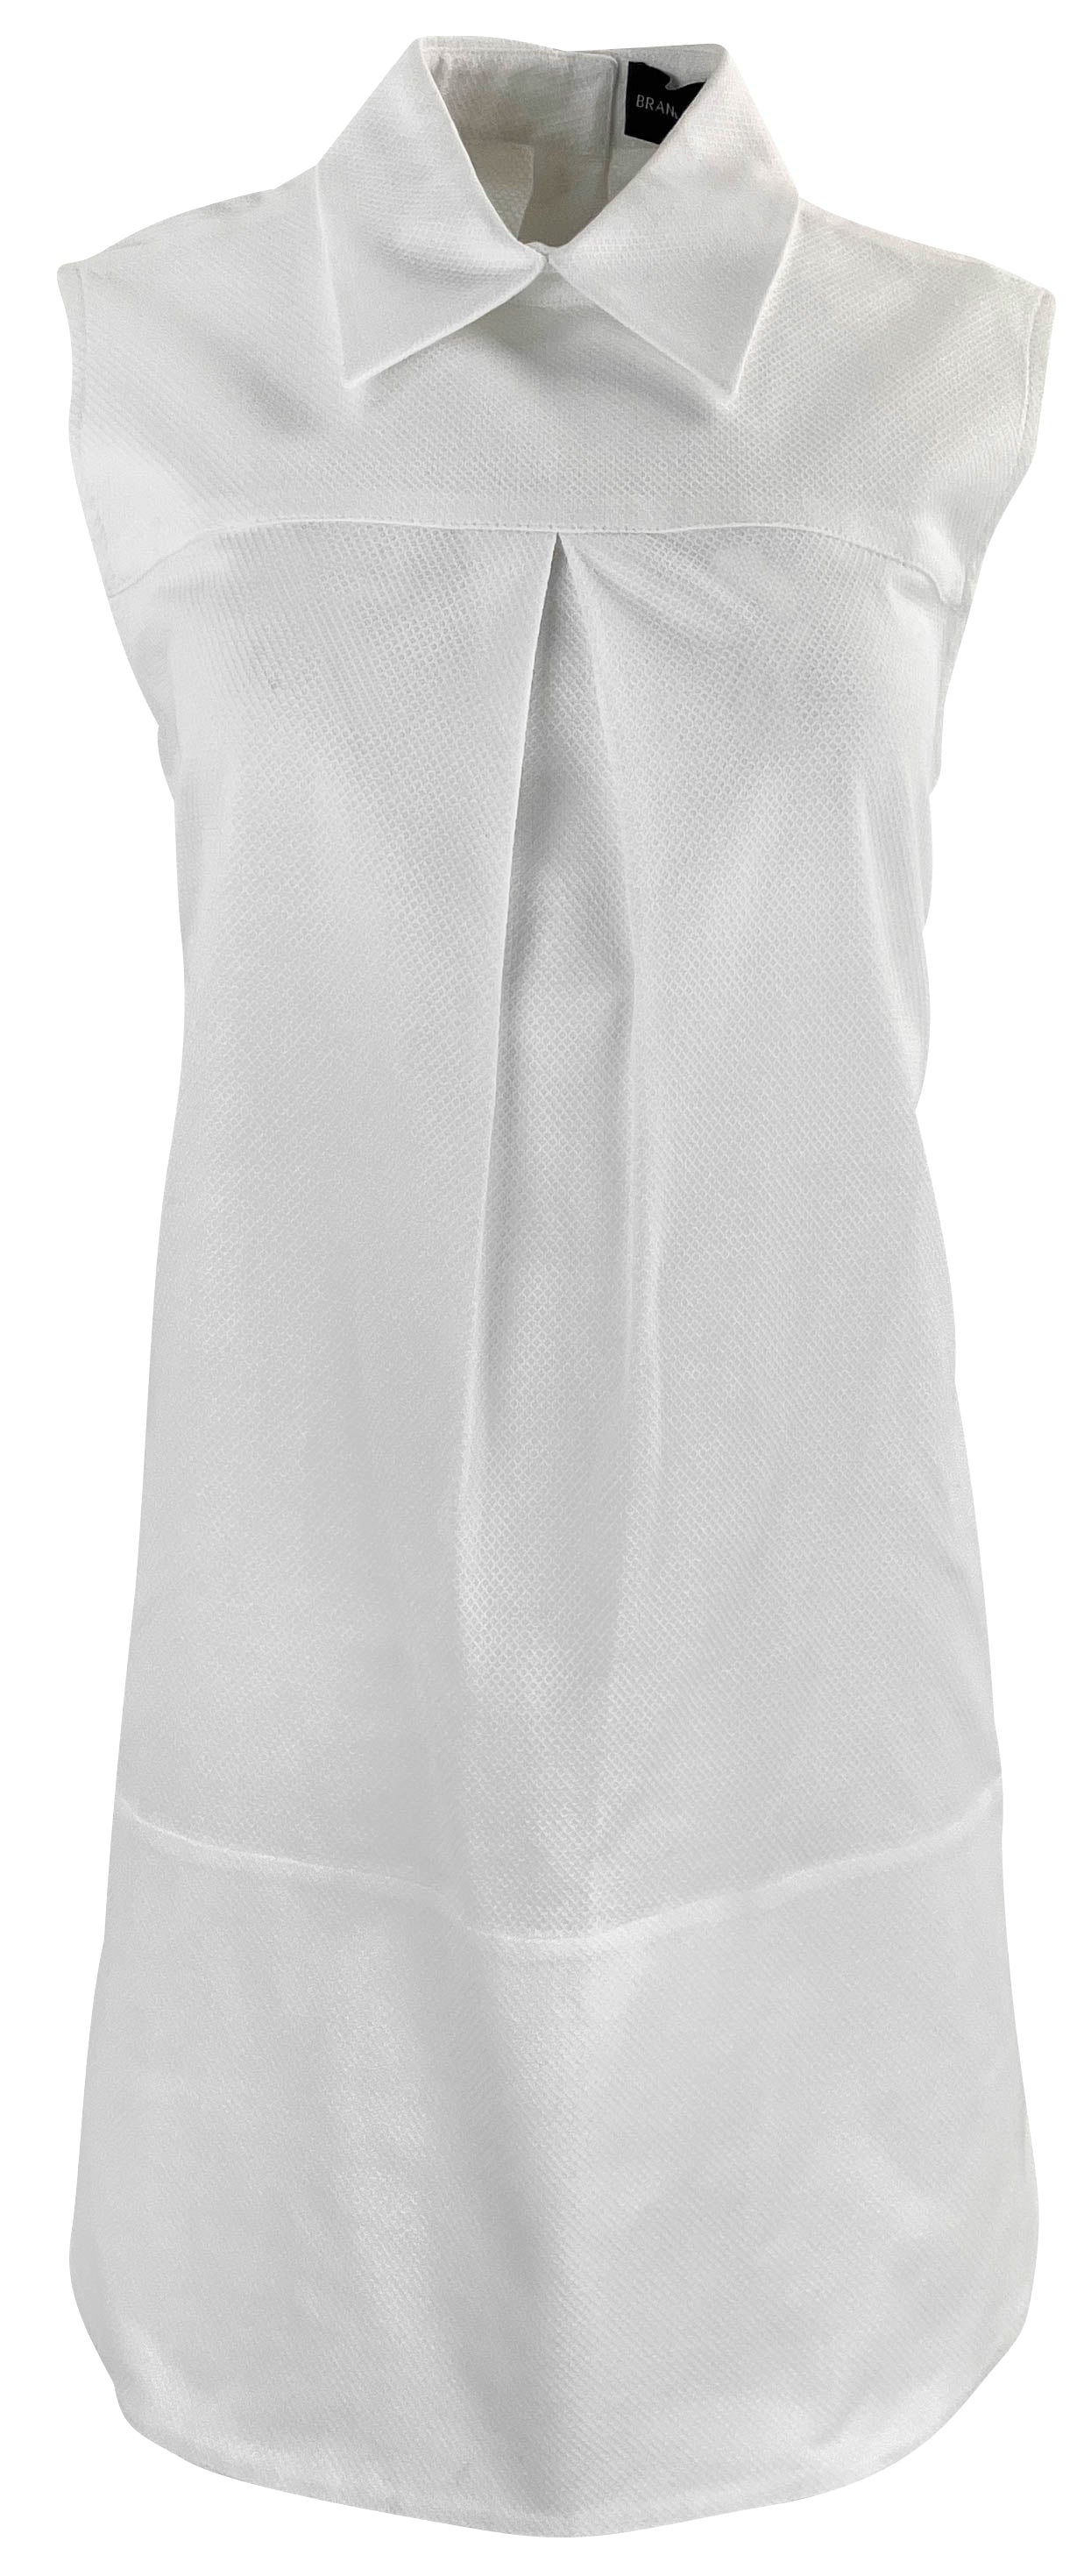 Brandon Maxwell Fran Shirtdress in White - Discounts on Brandon Maxwell at UAL